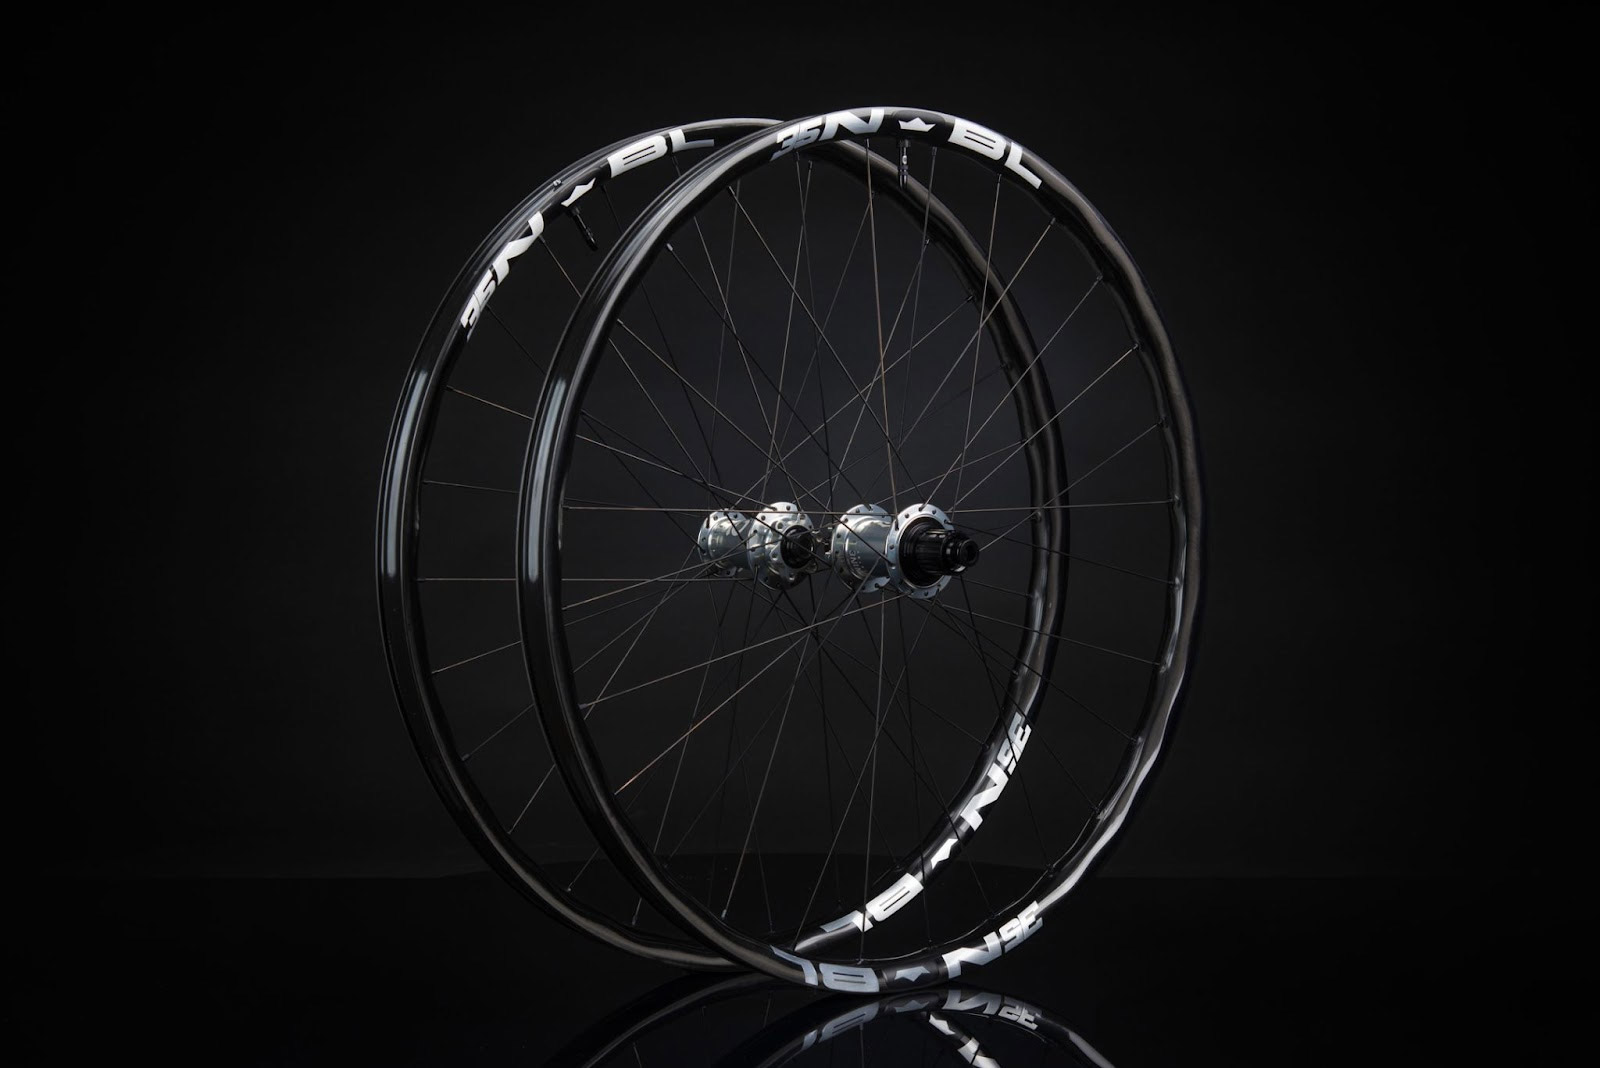 nobl tr35 wheelset carbon rims sinewave design aggressive xc downcountry riding